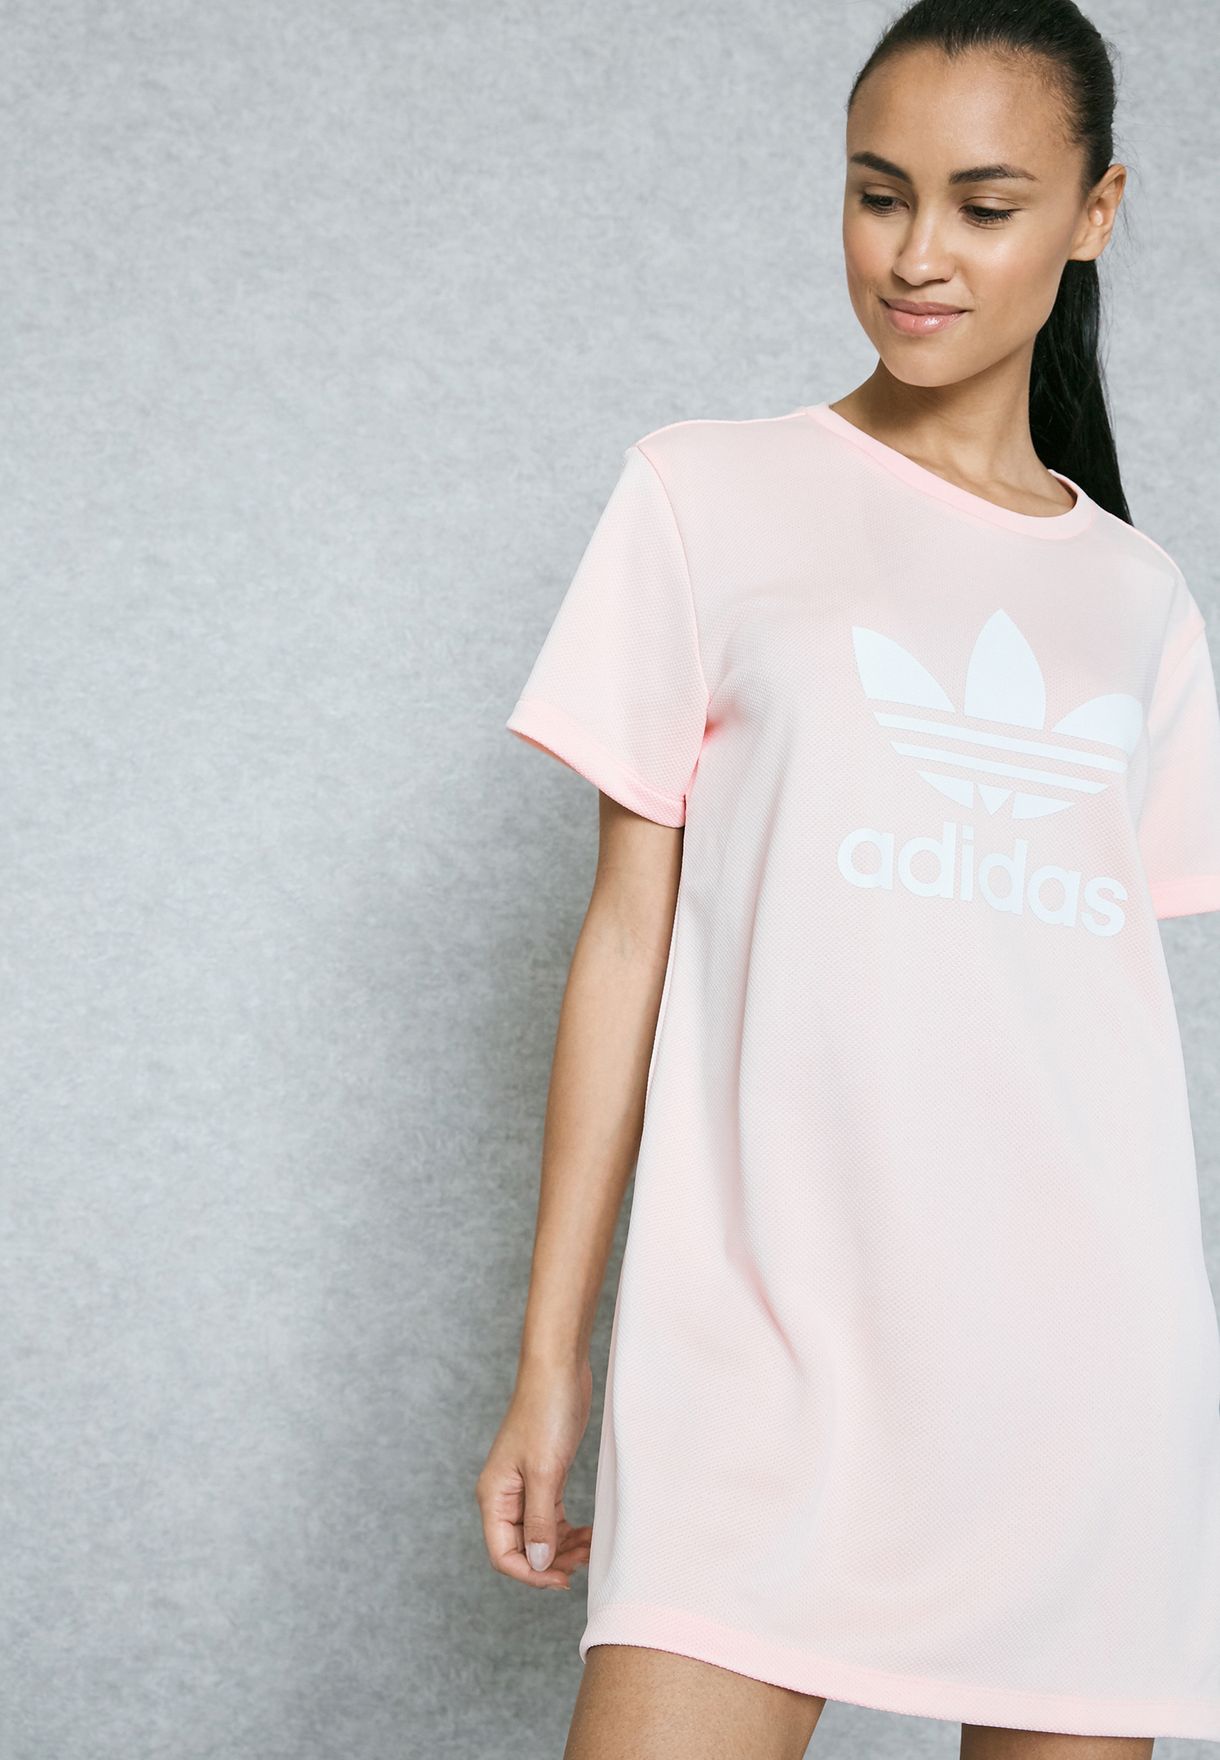 adidas pink t shirt dress